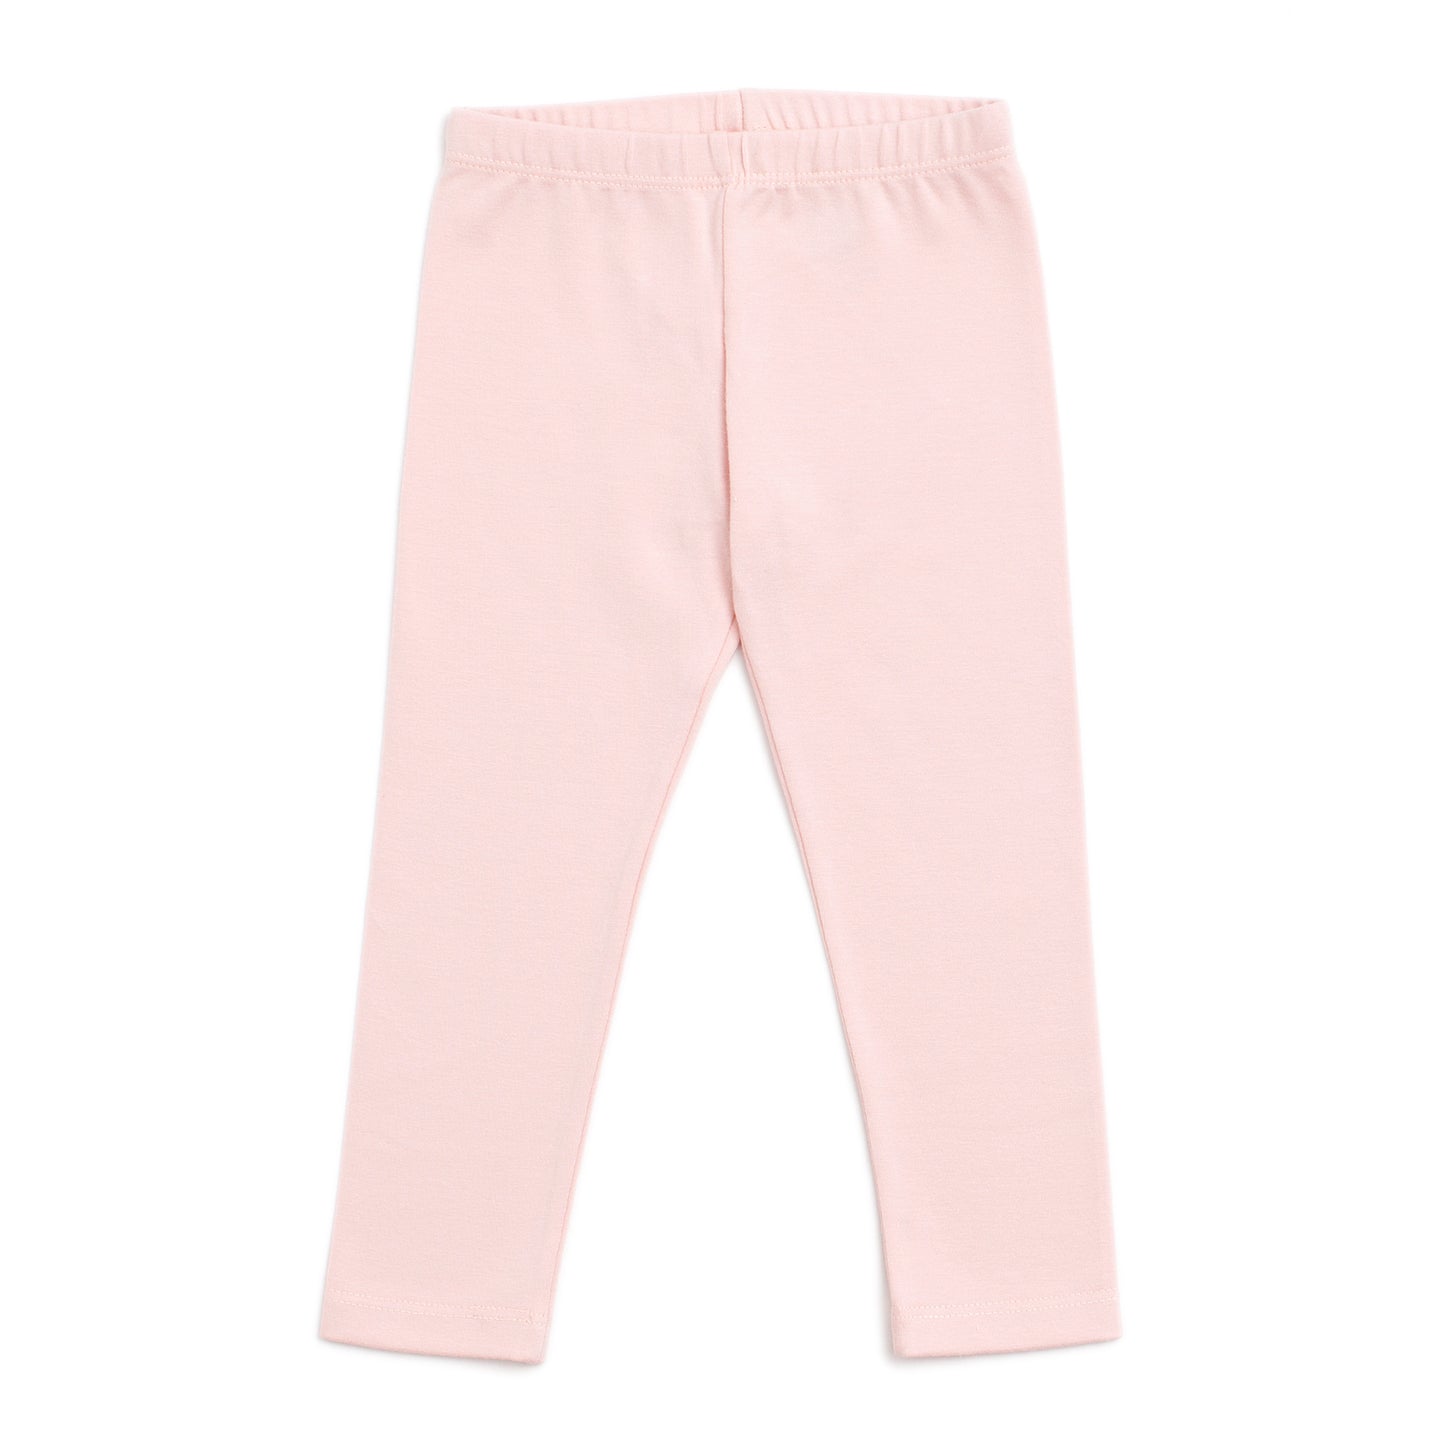 Leggings - Solid Pink